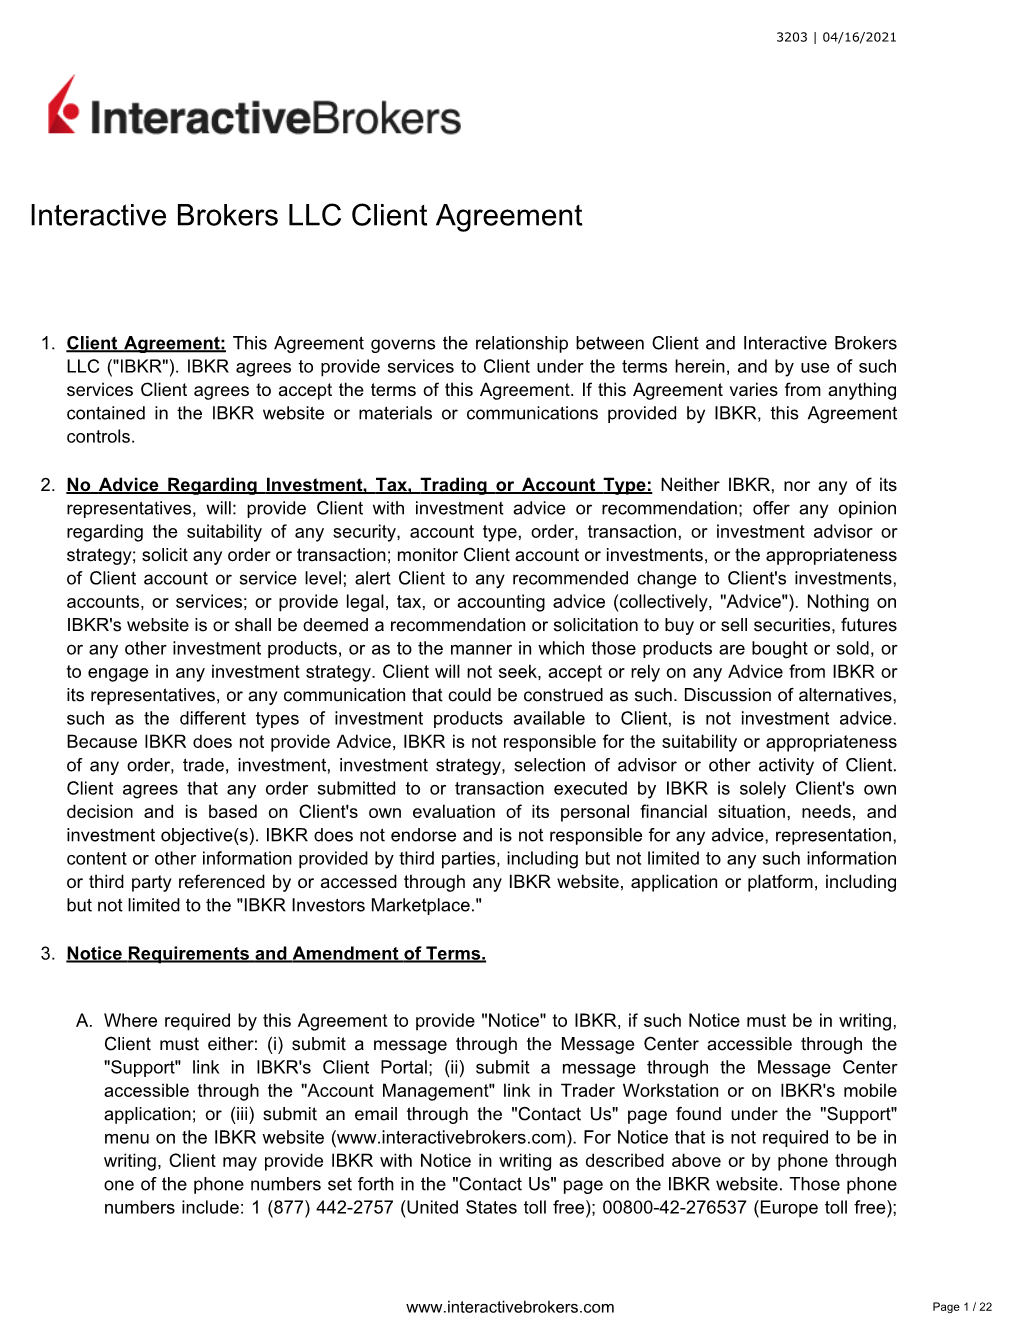 Interactive Brokers LLC Client Agreement